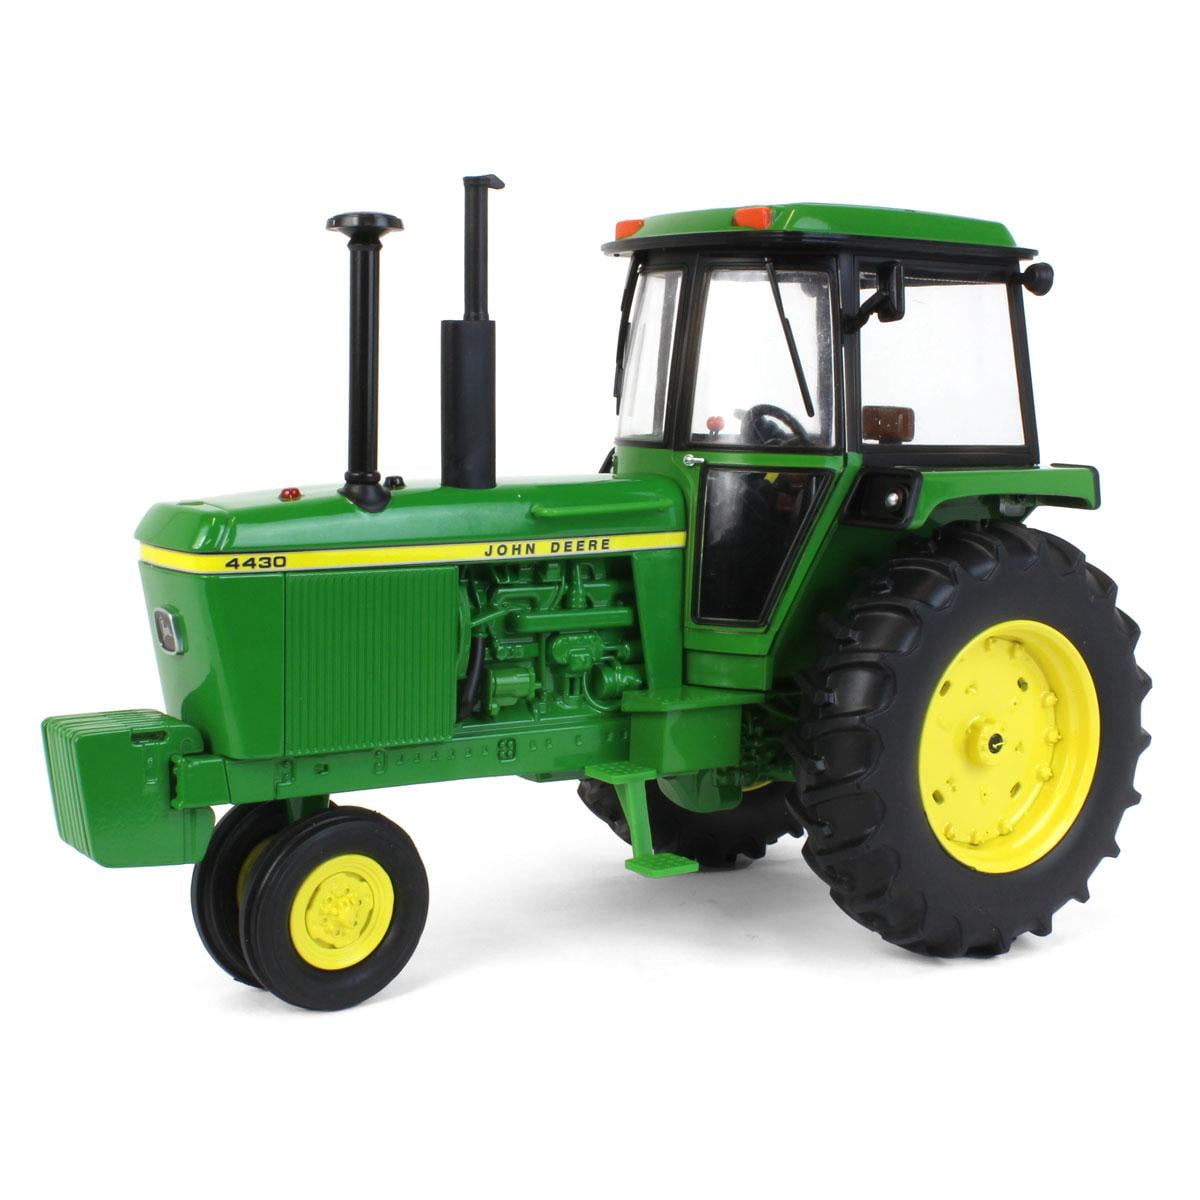 Universal Hobbies 1/16th Massey Ferguson TEA-20 “The Little Grey” Tractor  by Universal Hobbies UH2690